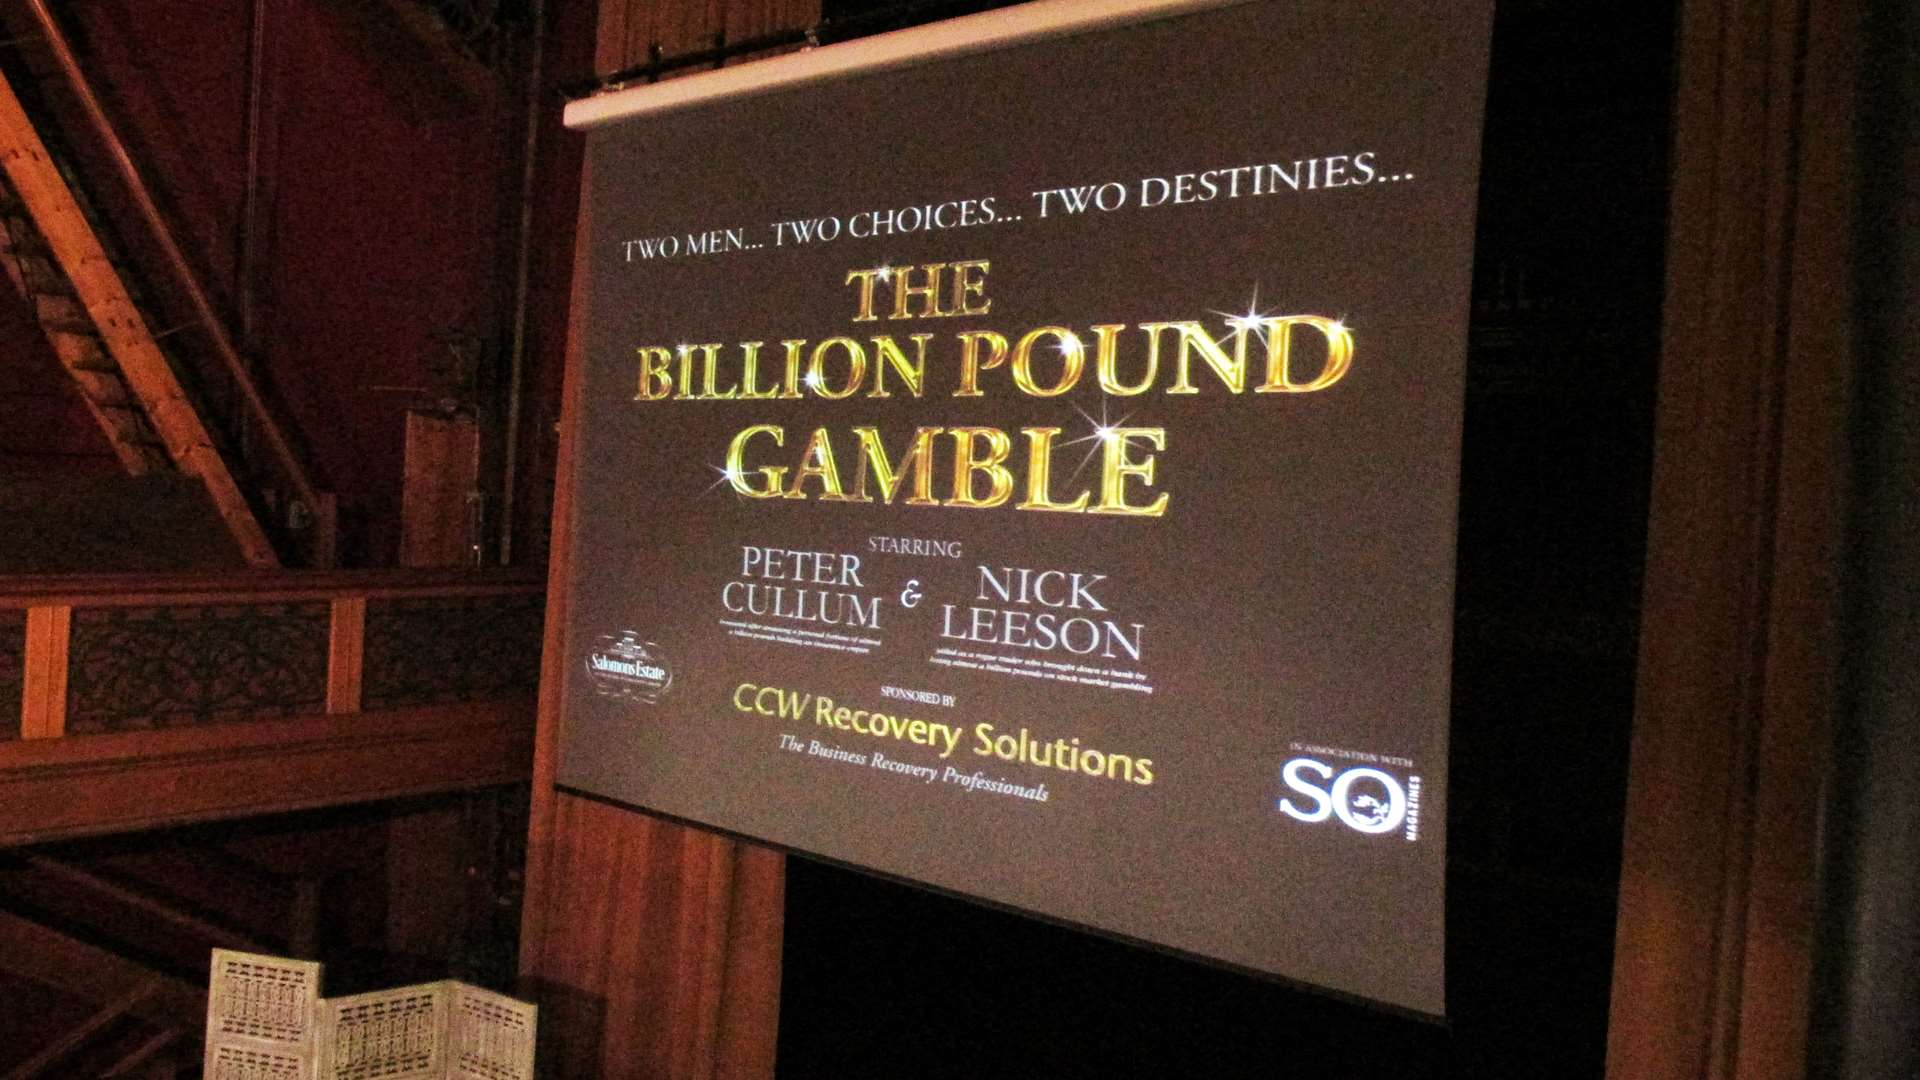 The Billion Pound Gamble was held in the Salomons Estate in Tunbridge Wells